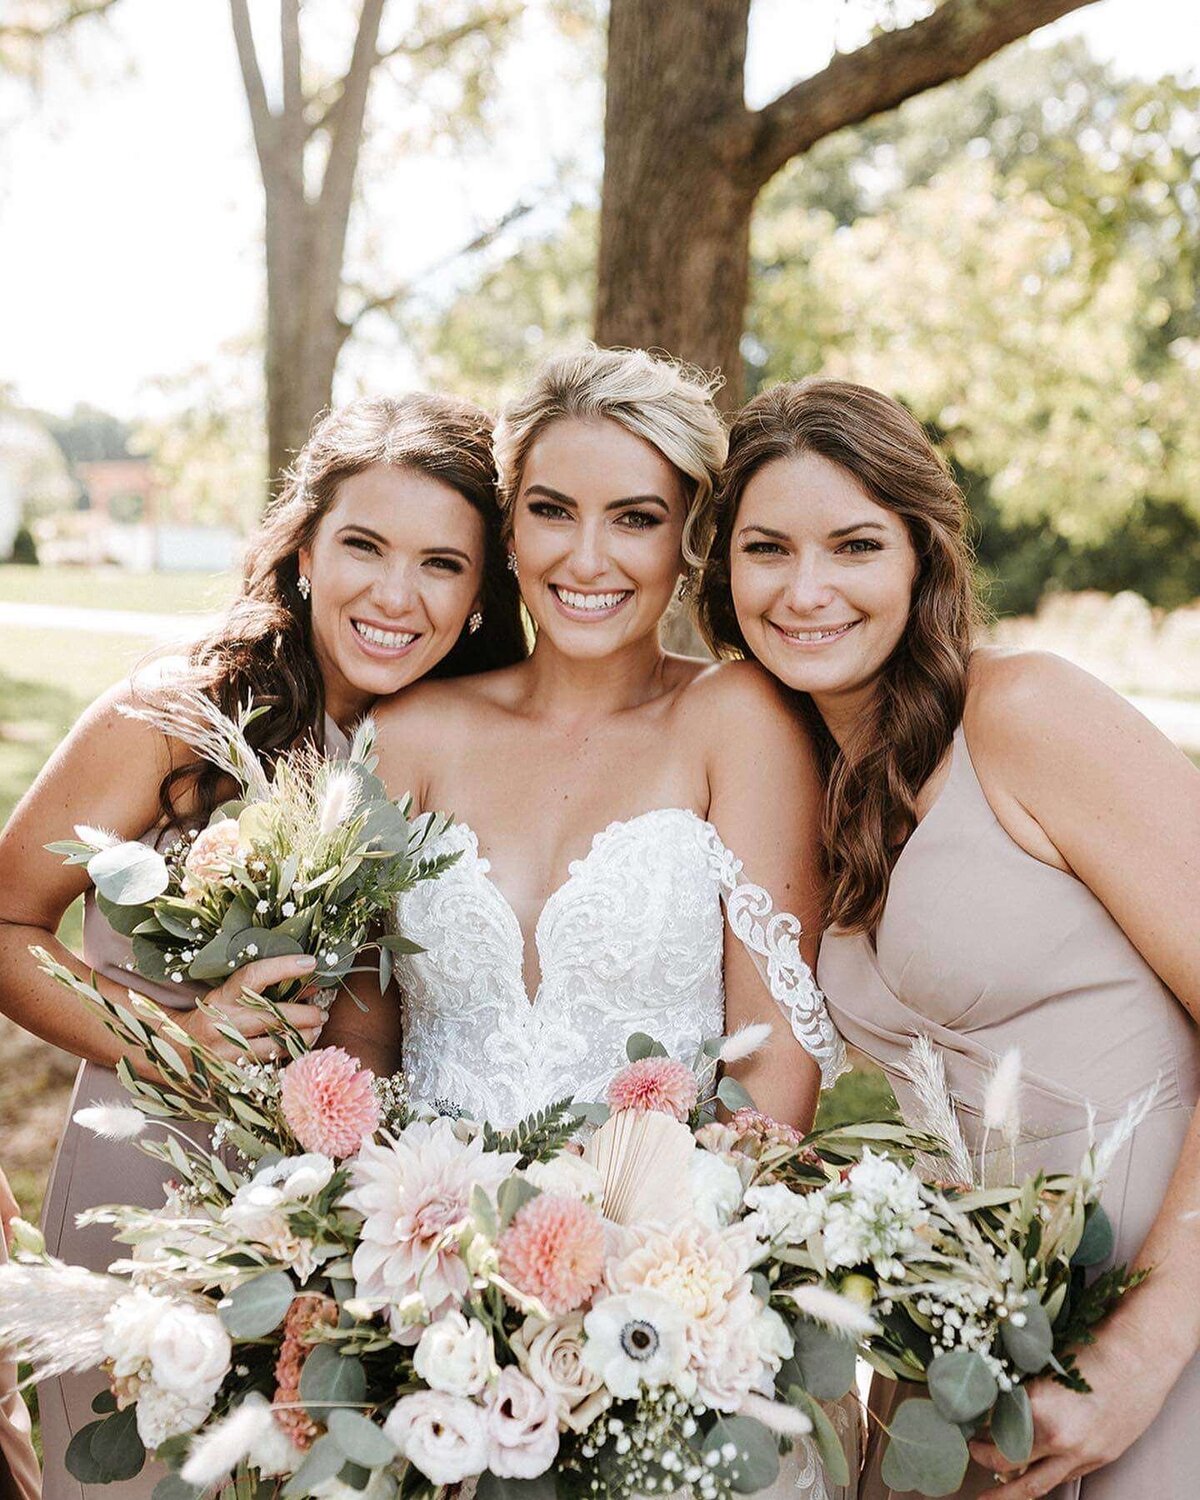 Natalie Brown wedding - bride smiling with bridesmaids